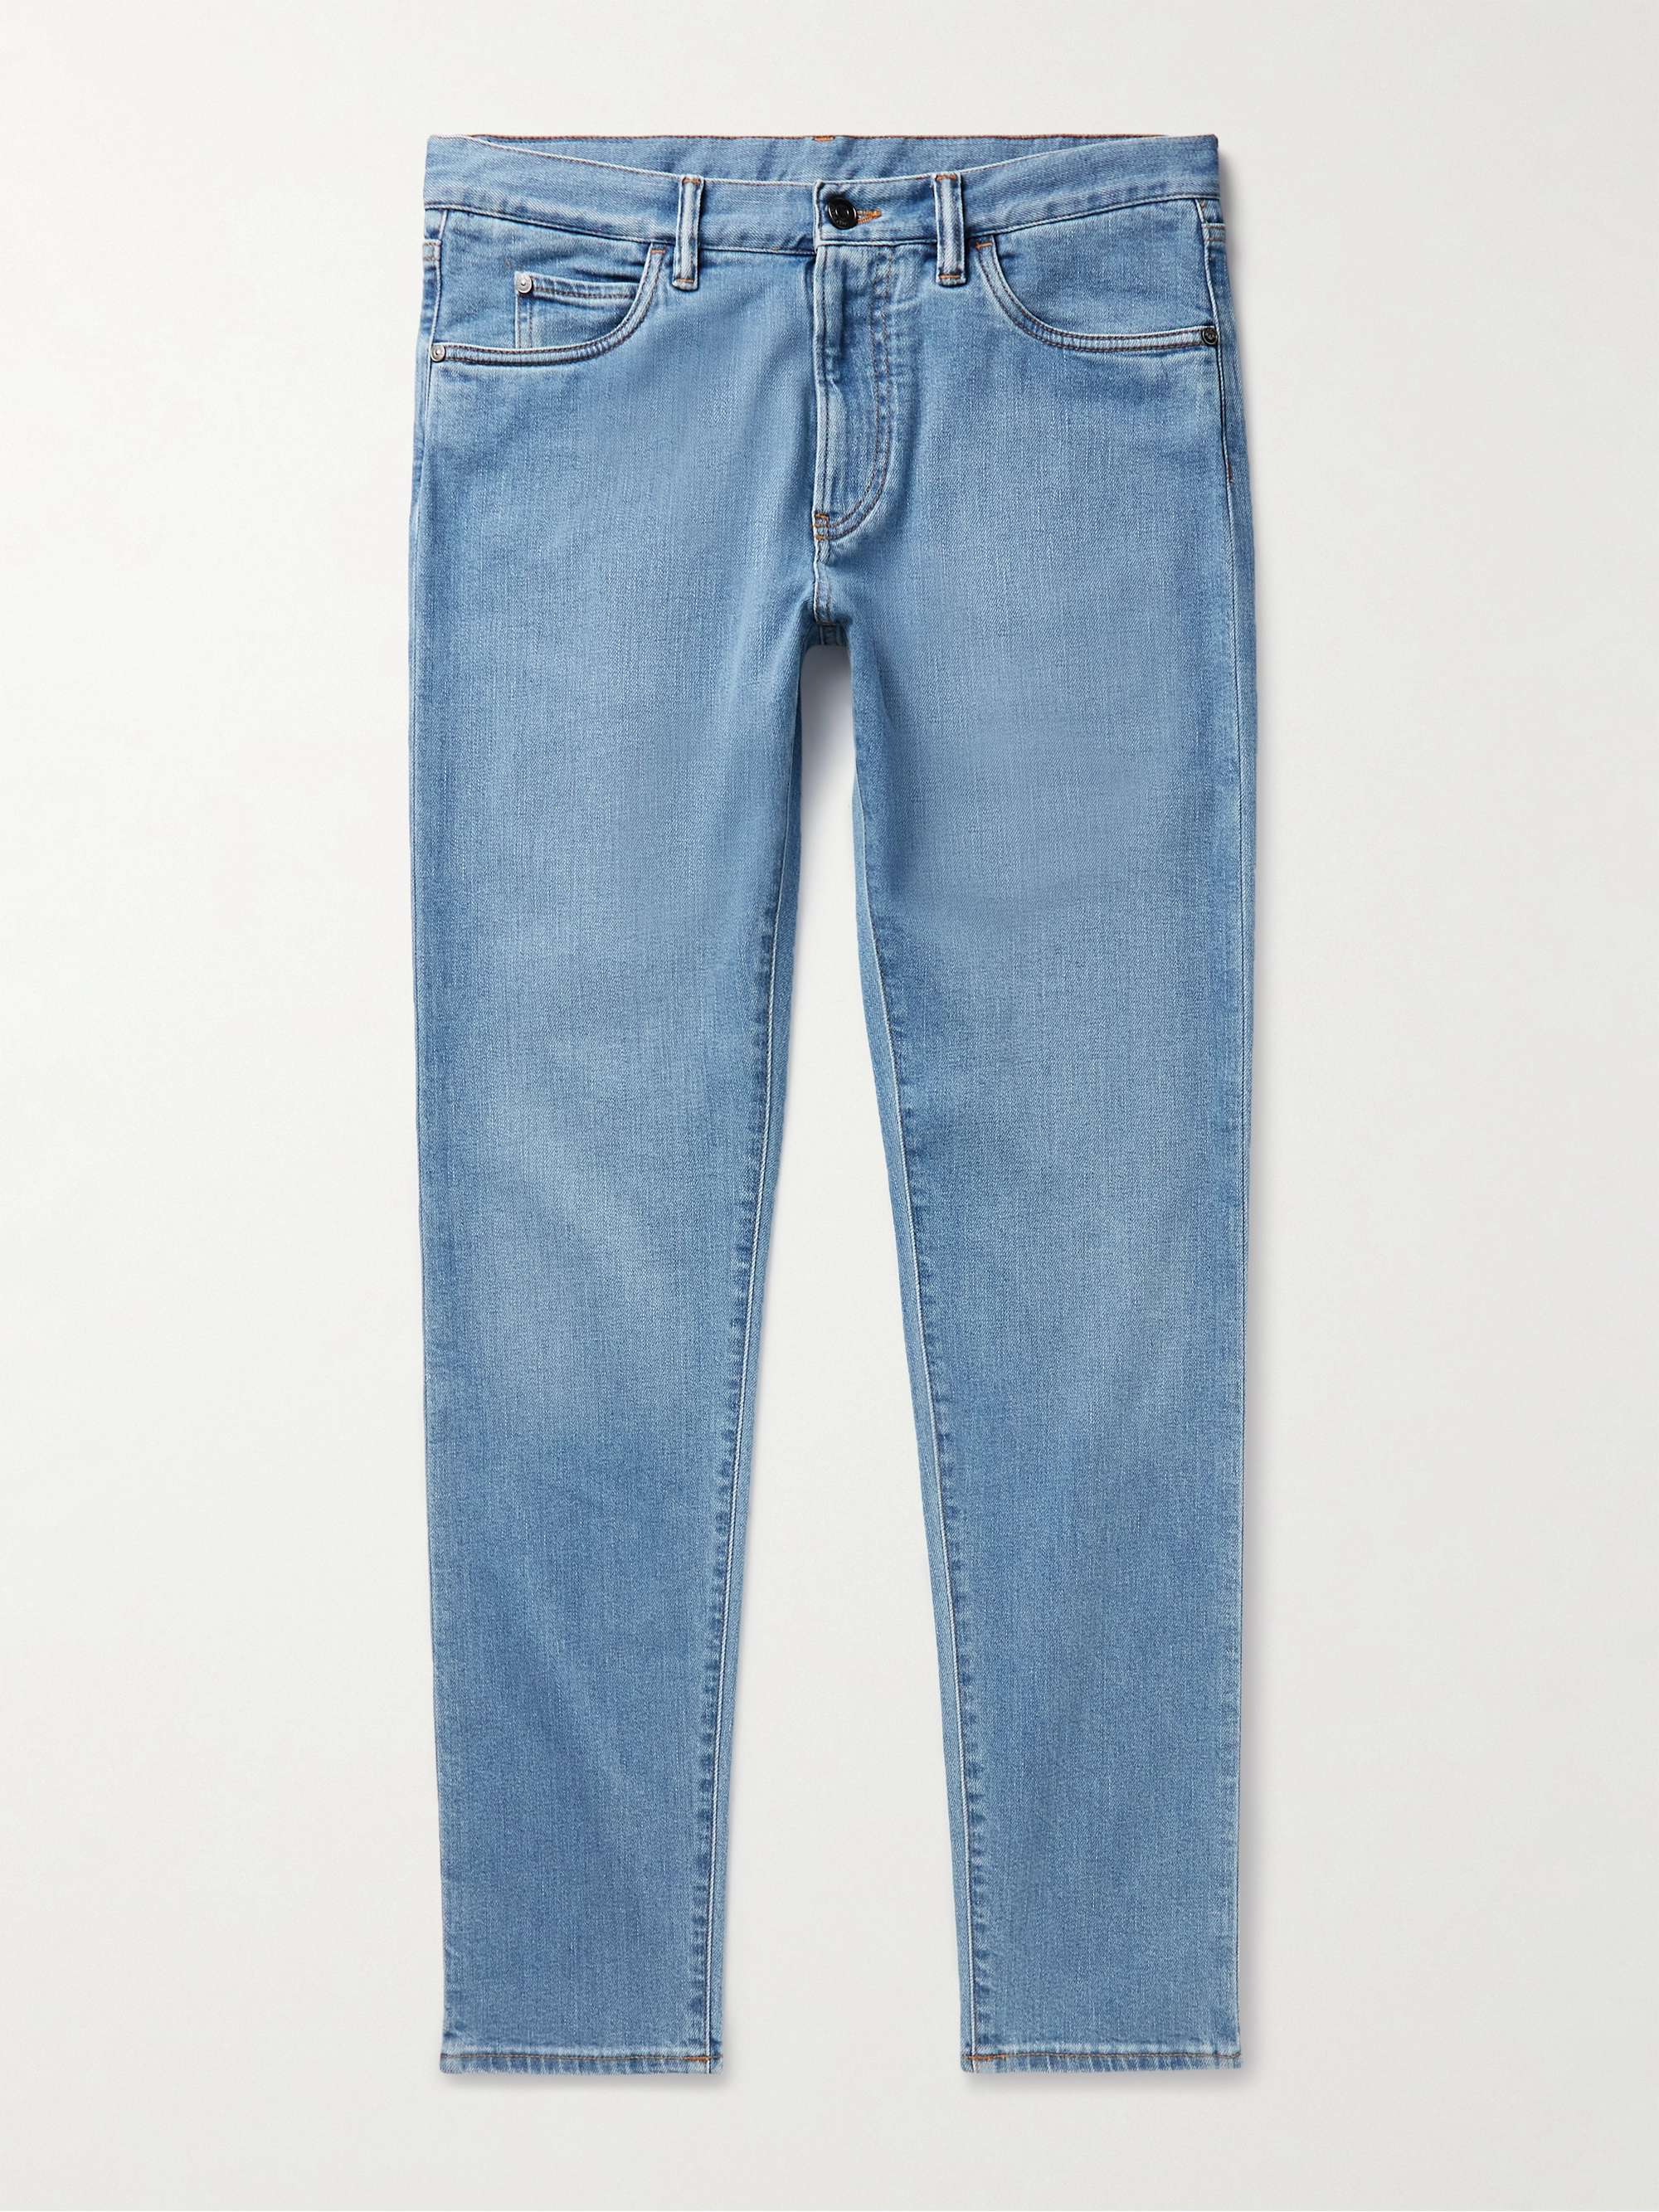 LORO PIANA Slim-Fit Jeans for Men | MR PORTER